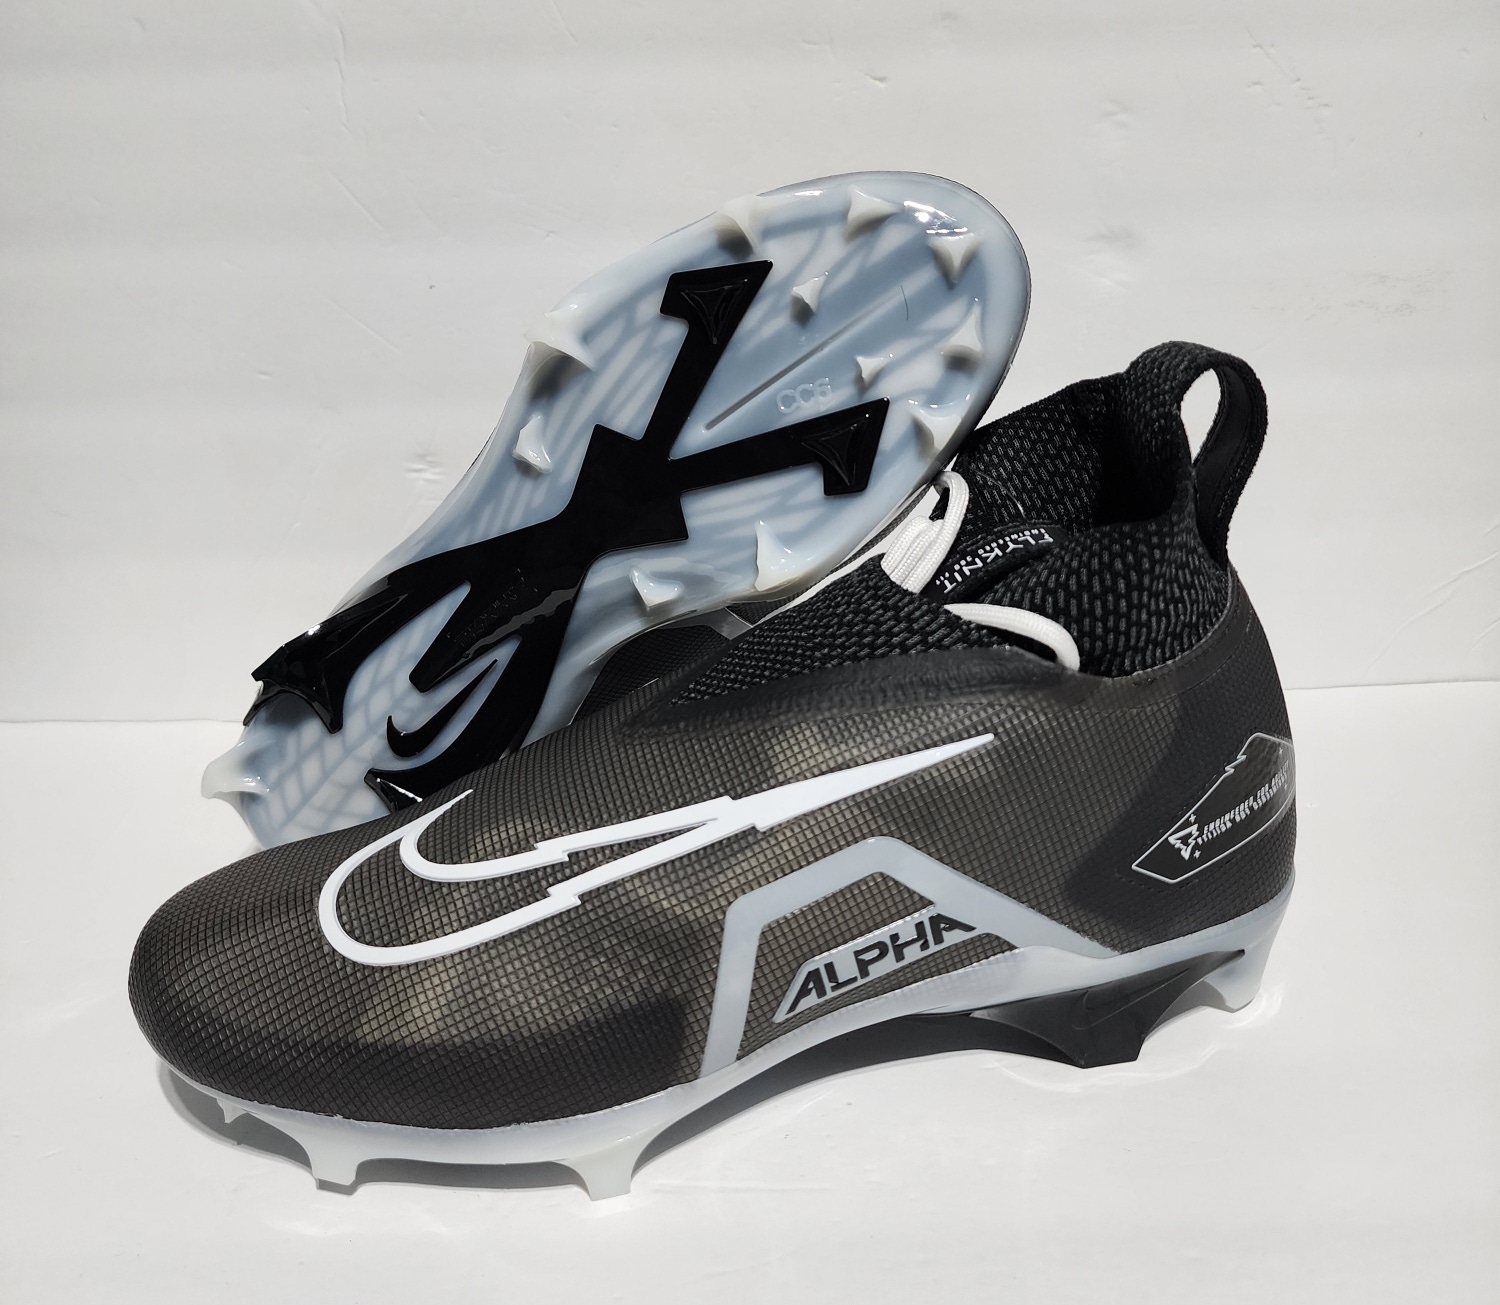 Nike Alpha Menace Elite 3 "Black” Football Cleats CT6648-001 Men’s Size 10.5